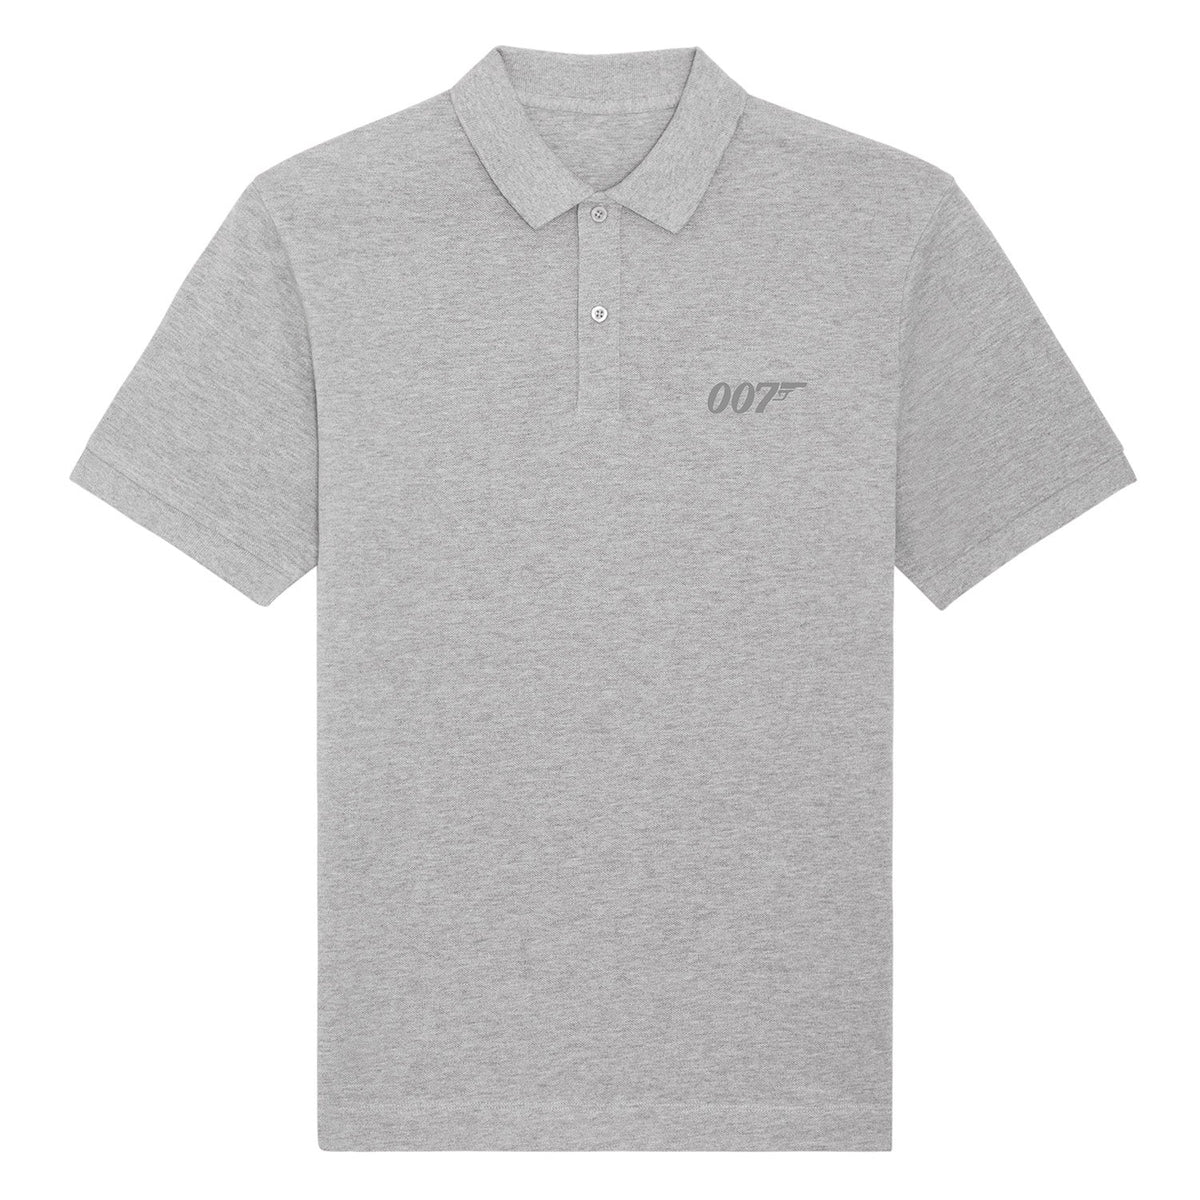 James Bond Grey Marl 007 Embroidered Cotton Polo Shirt EML 